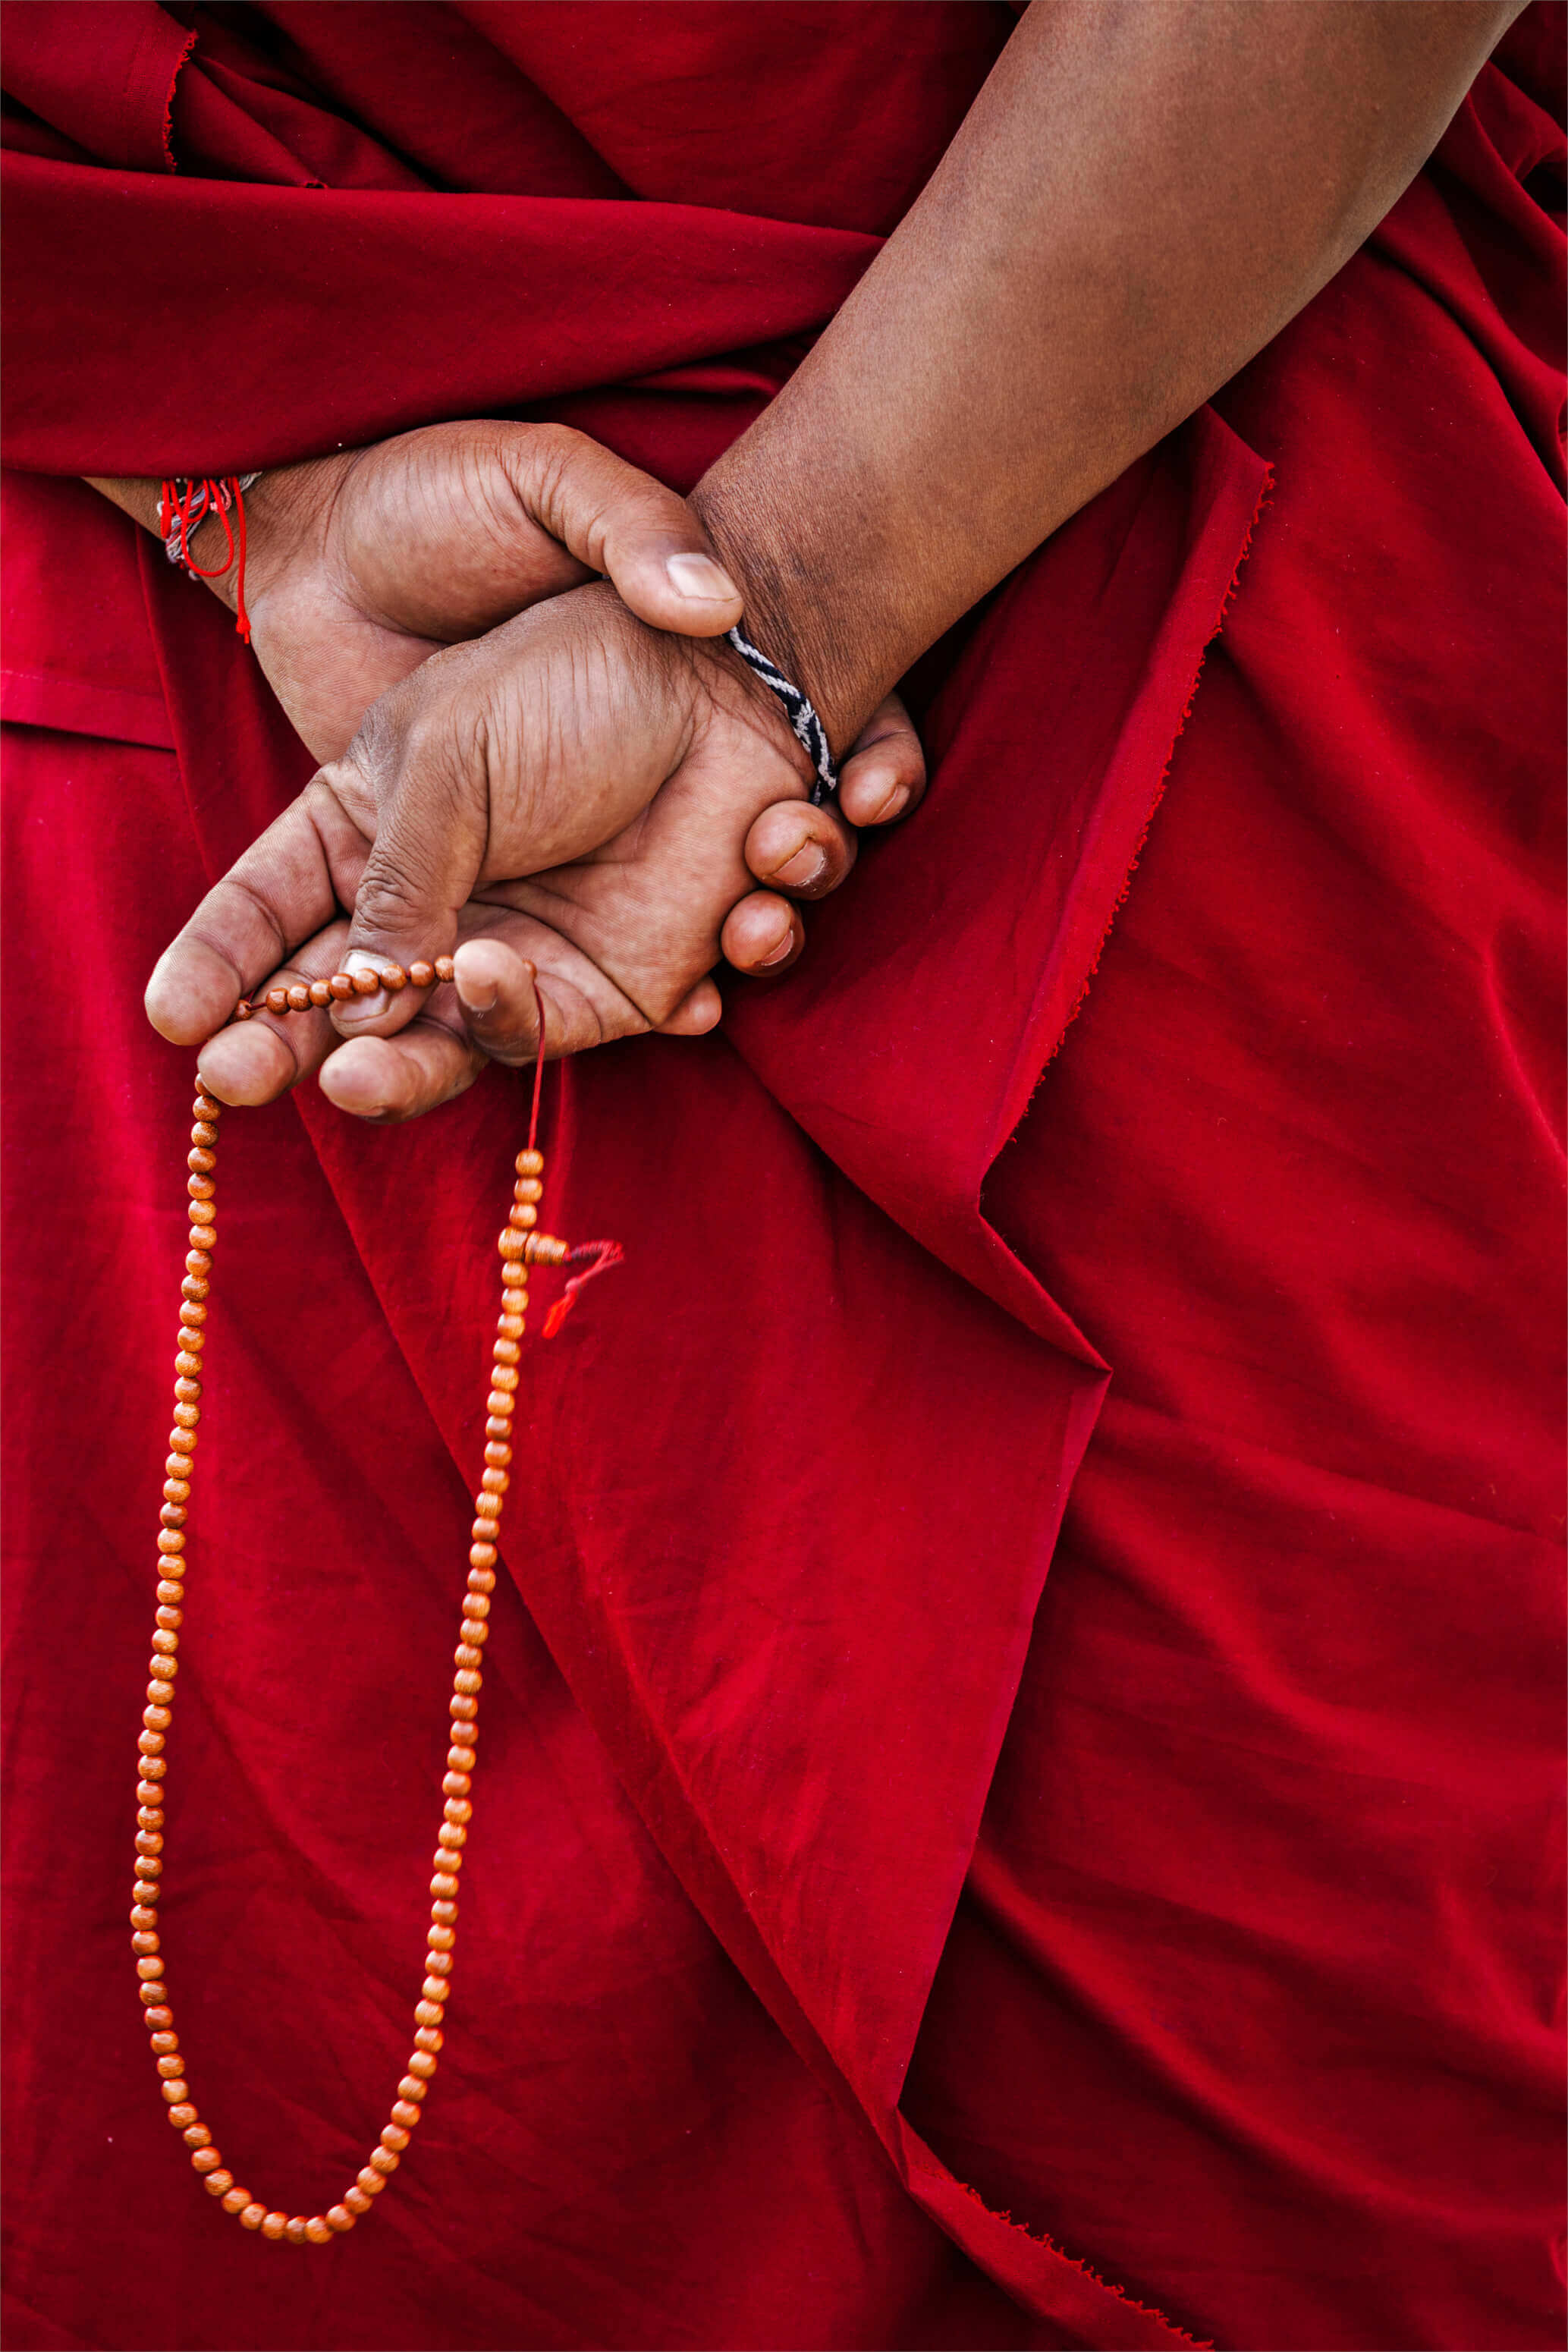 Tibetan Buddhist culture